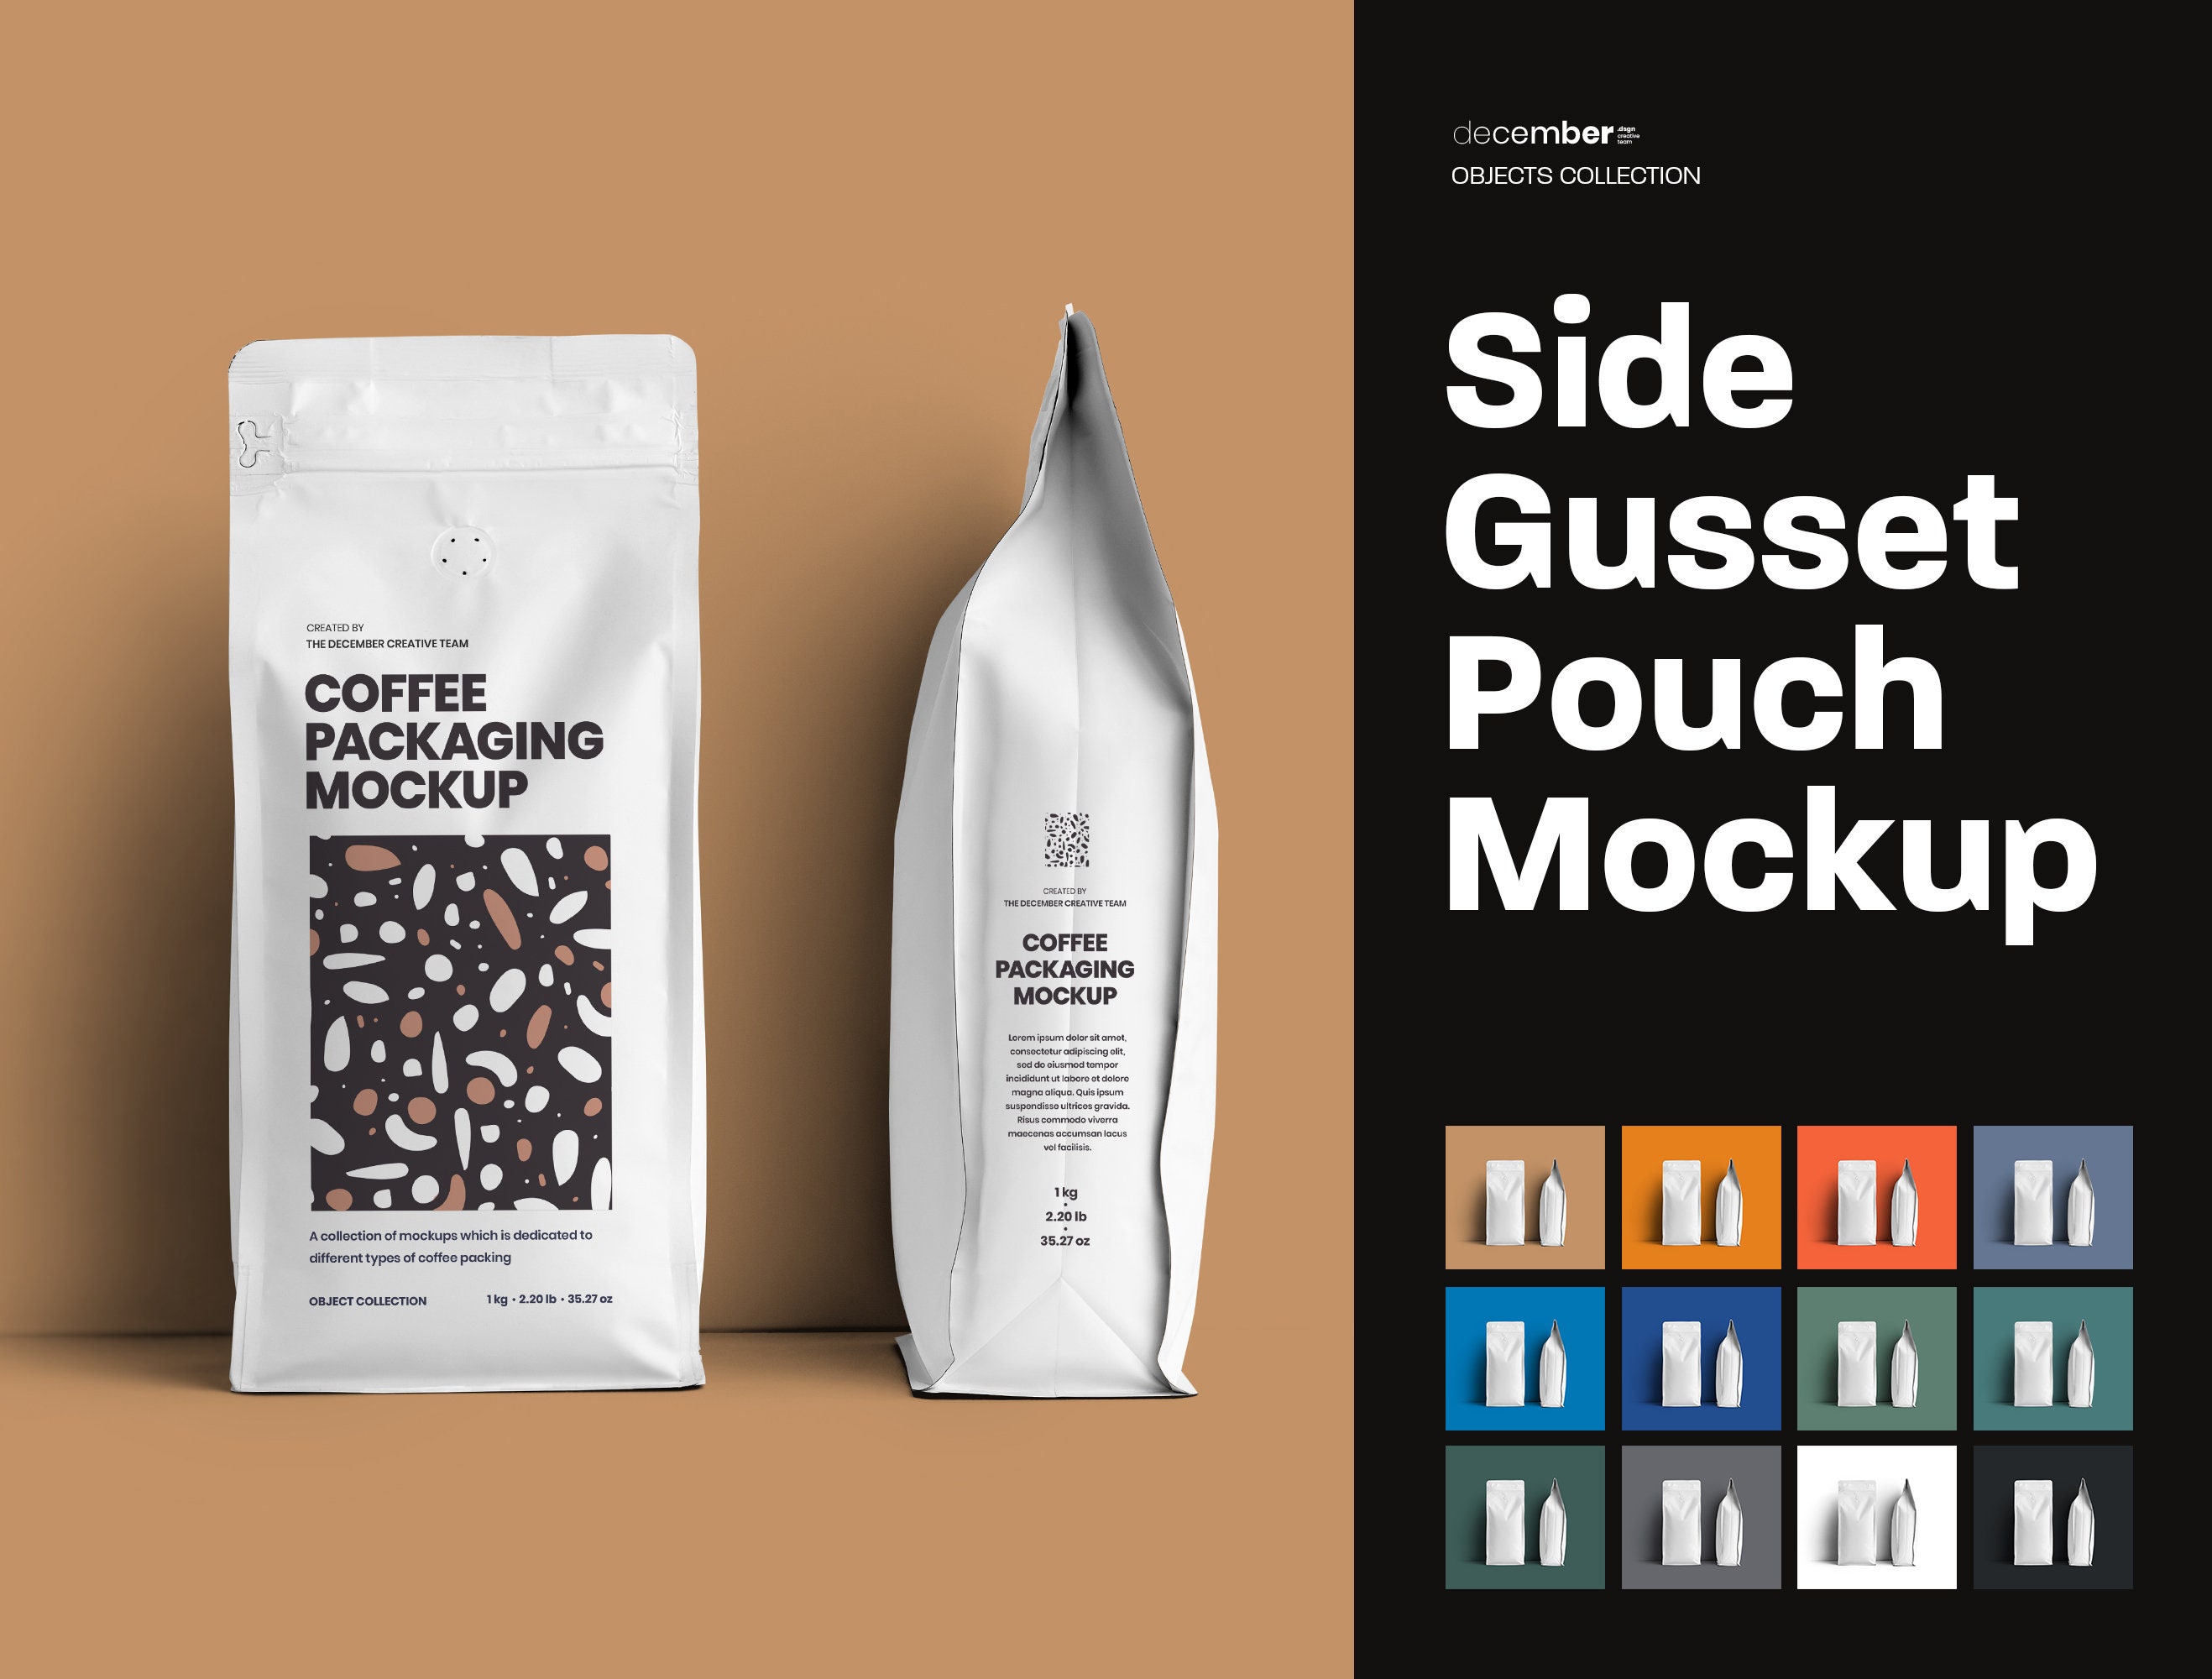 Dark Matter Coffee's Cool Bag Art - Bon Appétit | Bon Appétit